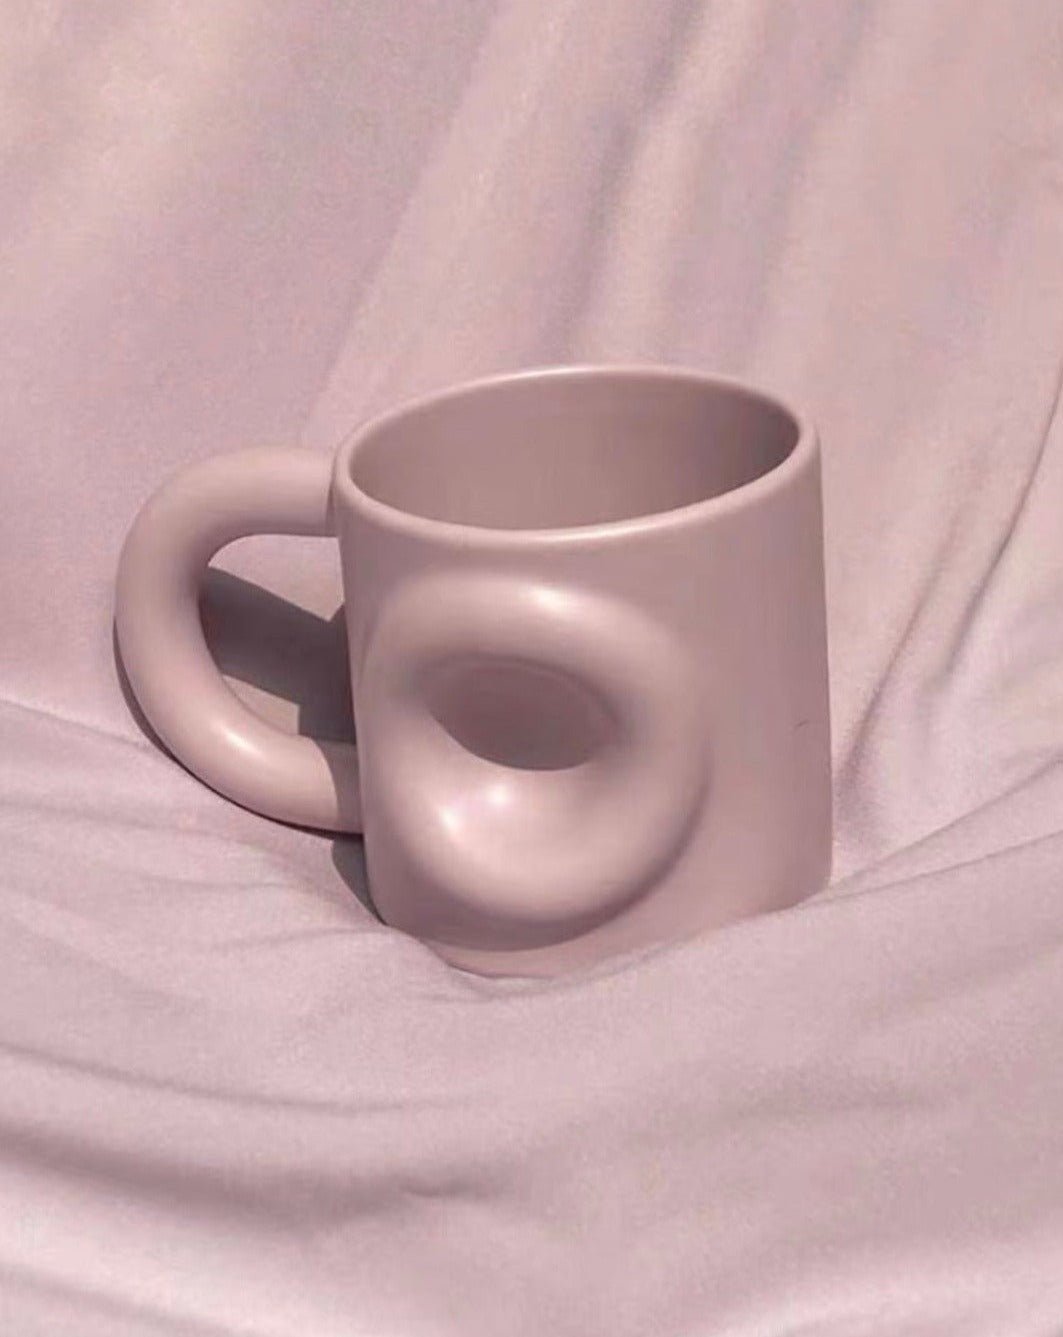 Handcrafted Ceramic Donut Mug - Cute & Novelty Donut-Shaped Coffee Mug - Ceramic Donut Mugs - Grape - INSPECIAL HOME